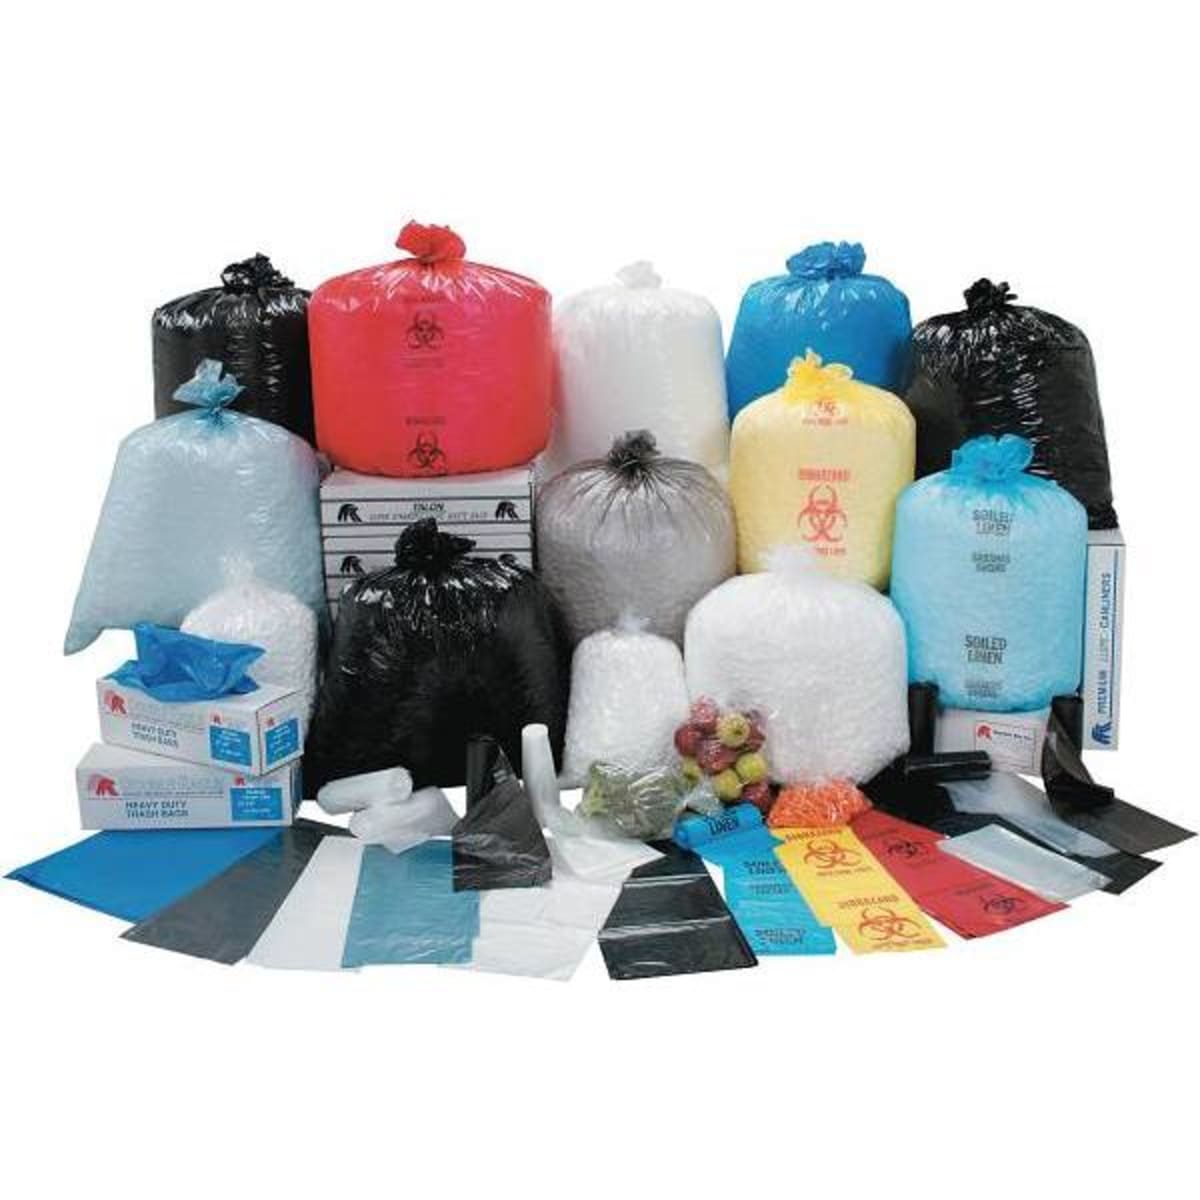 Aluf Plastics 20-30 Gallon Trash Bags - 100 Count 0.7 Mil Low Density Plastic